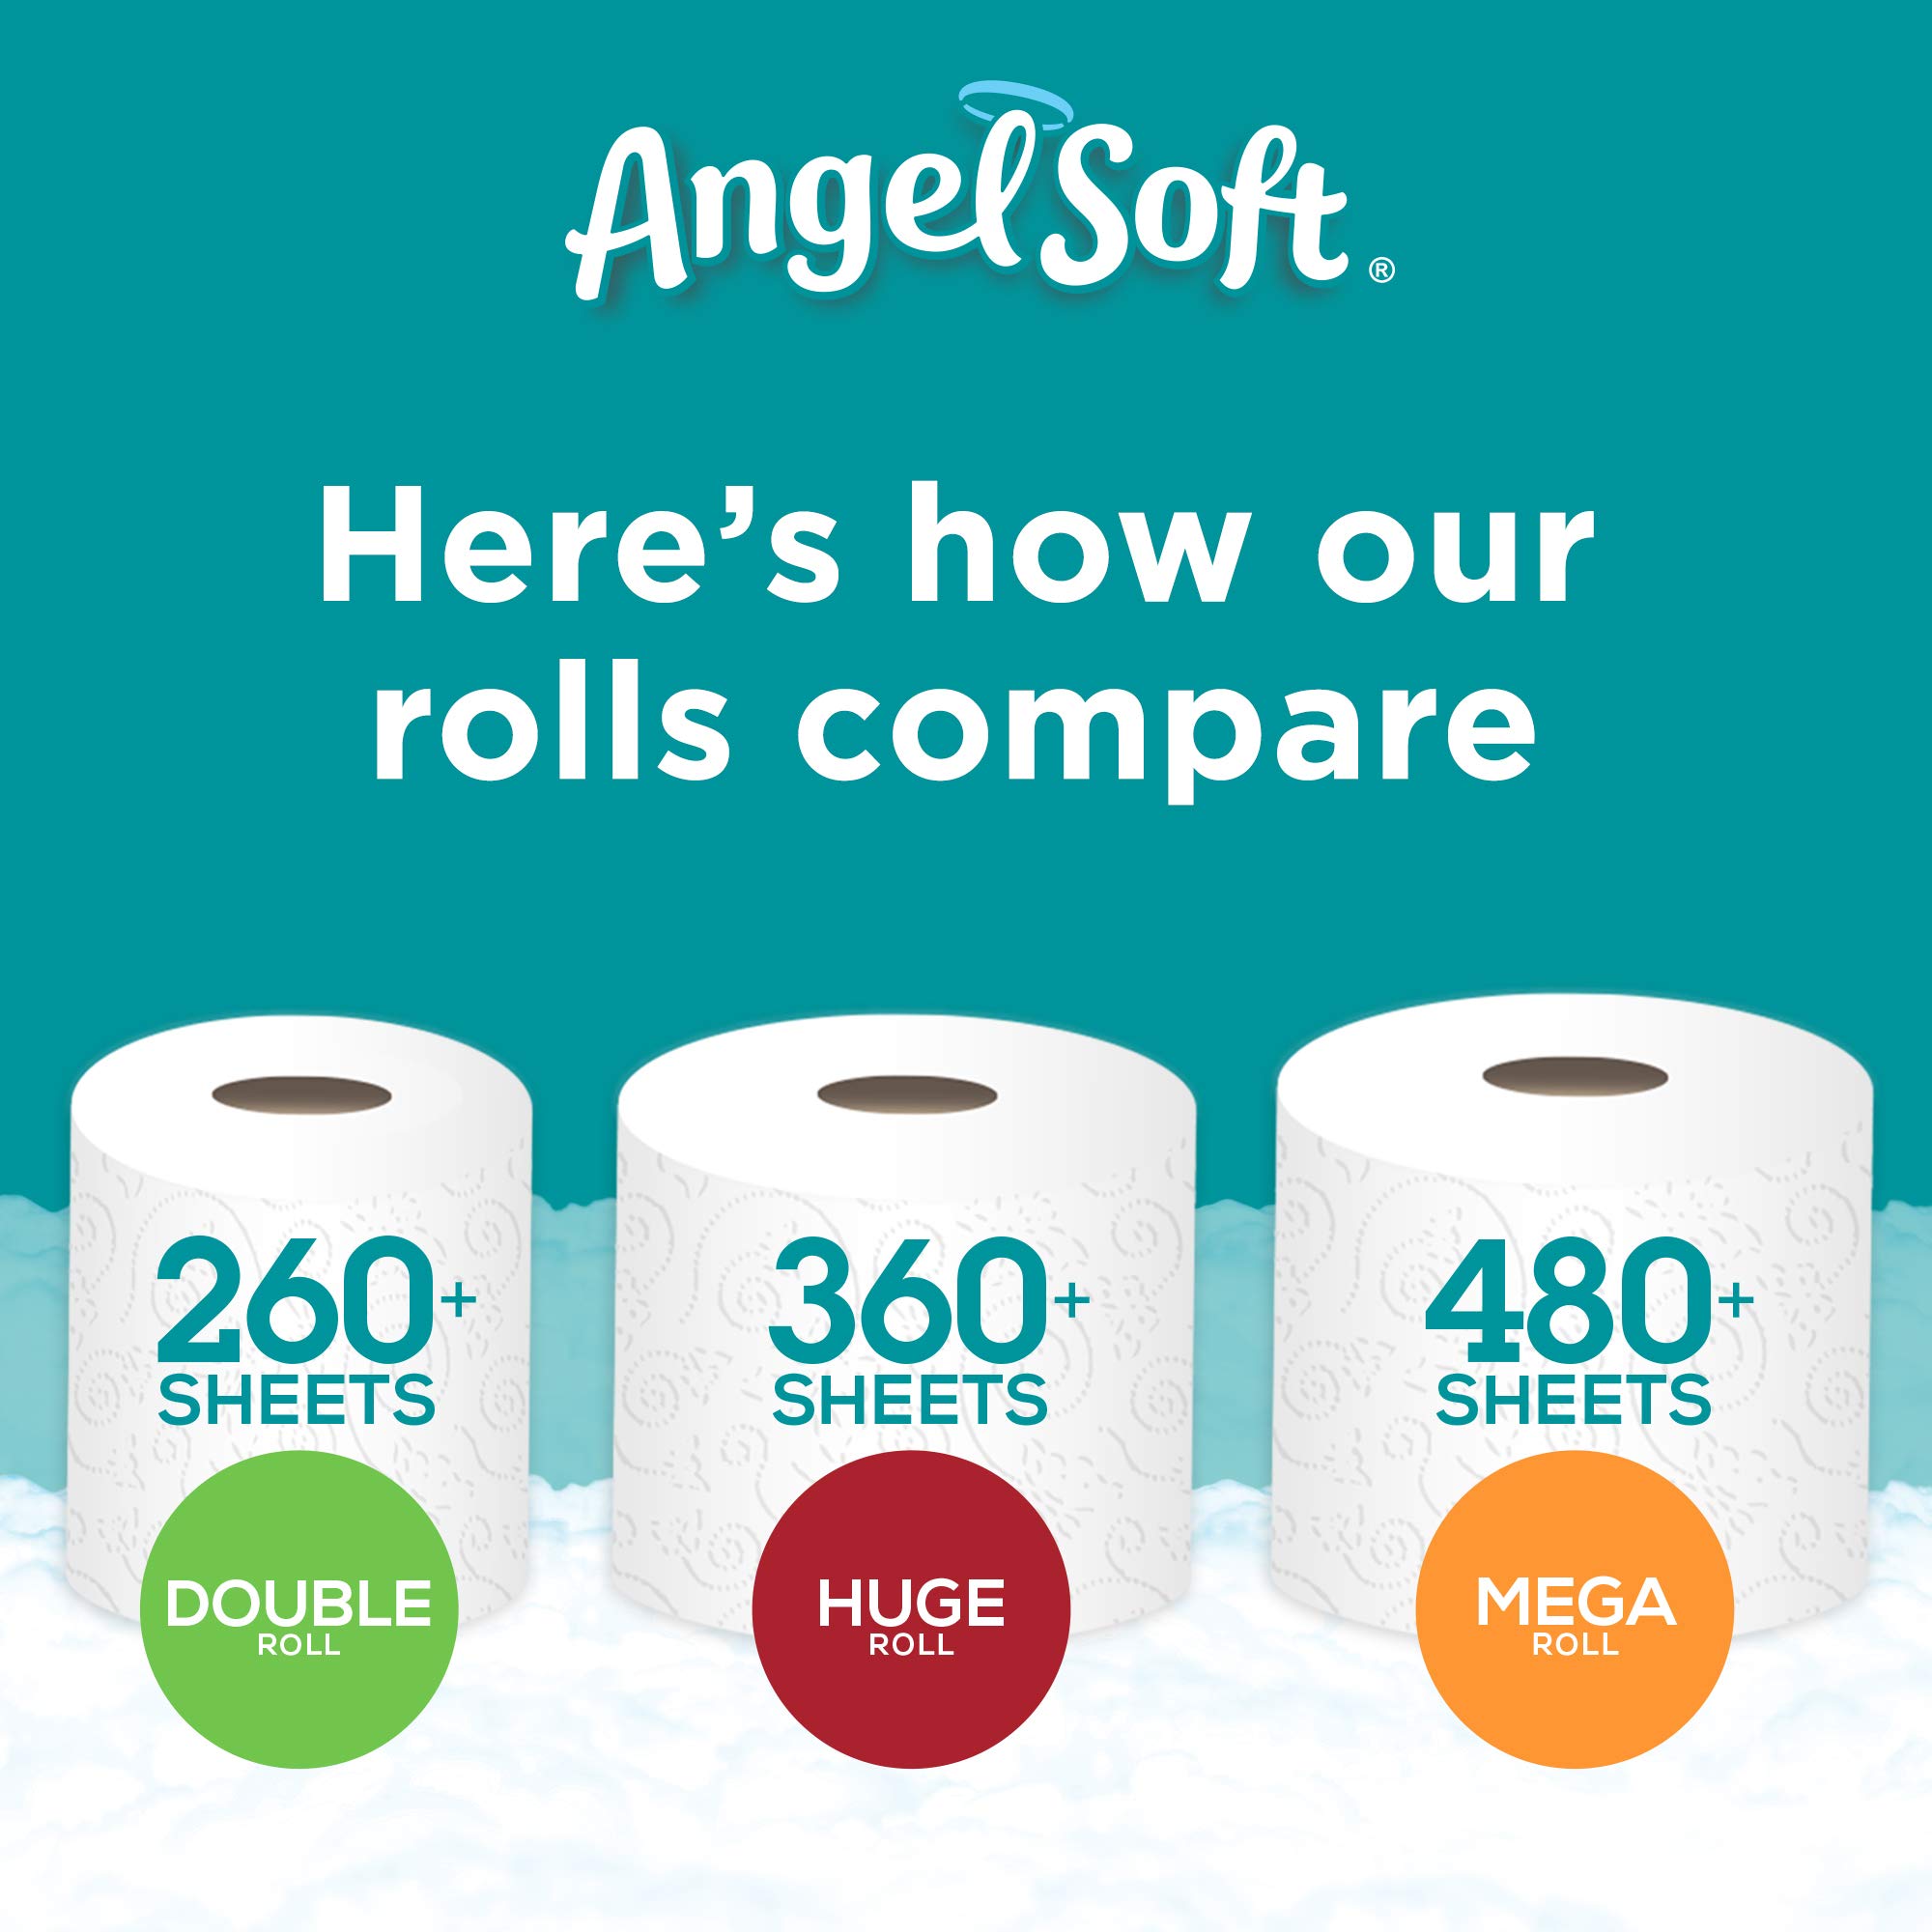 LIFTREN Angel Soft Toilet Paper Bath Tissue, 12 Double Rolls, 260+ 2-Ply Sheets Per Roll